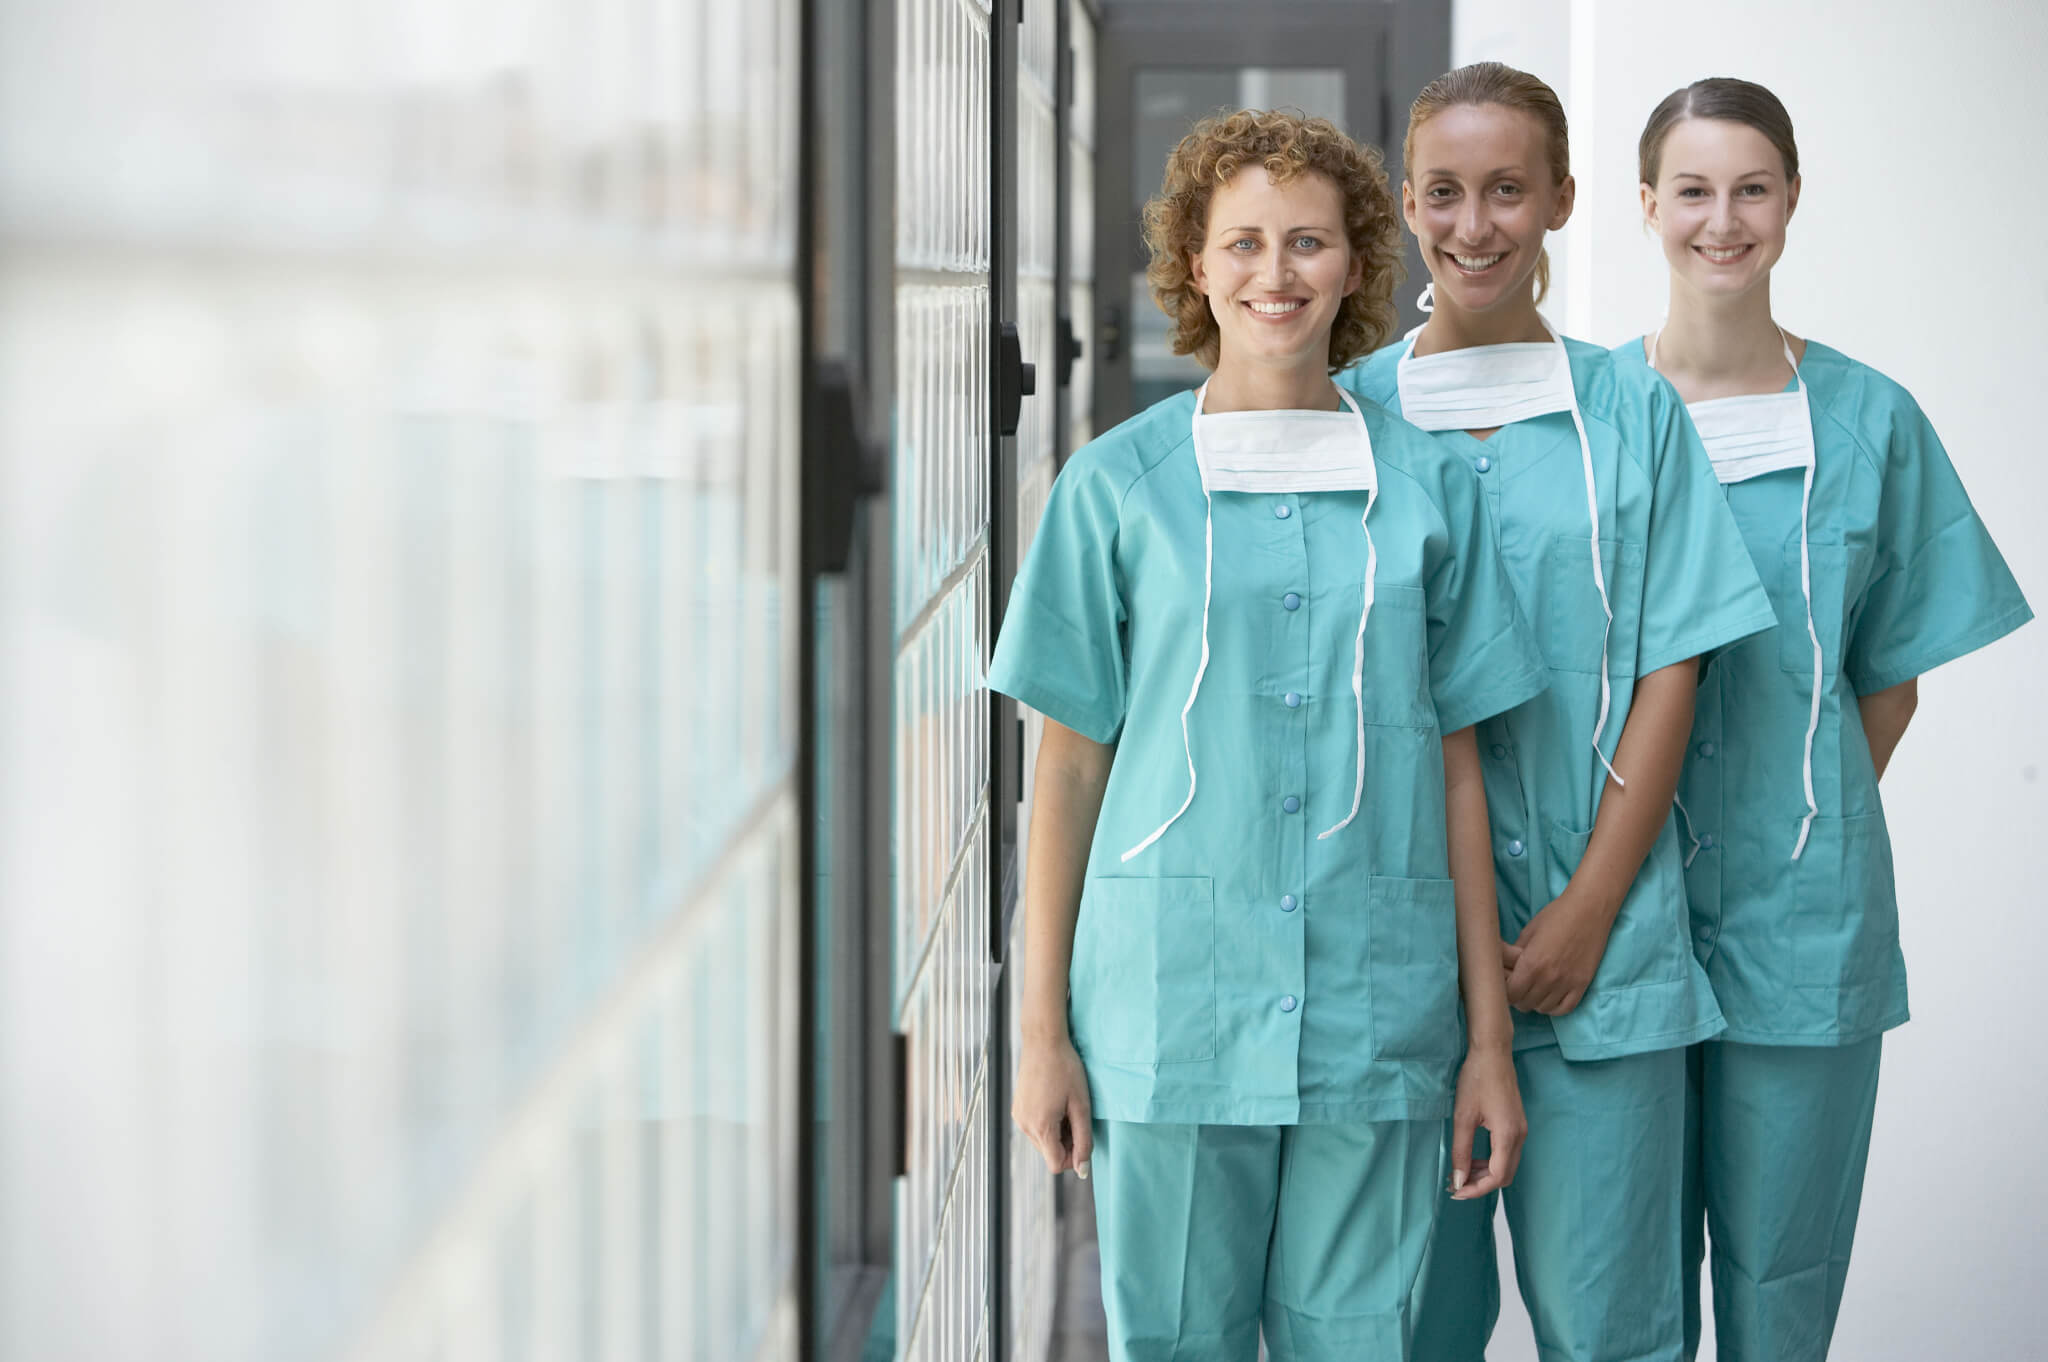 Krankenhauspflegekräfte